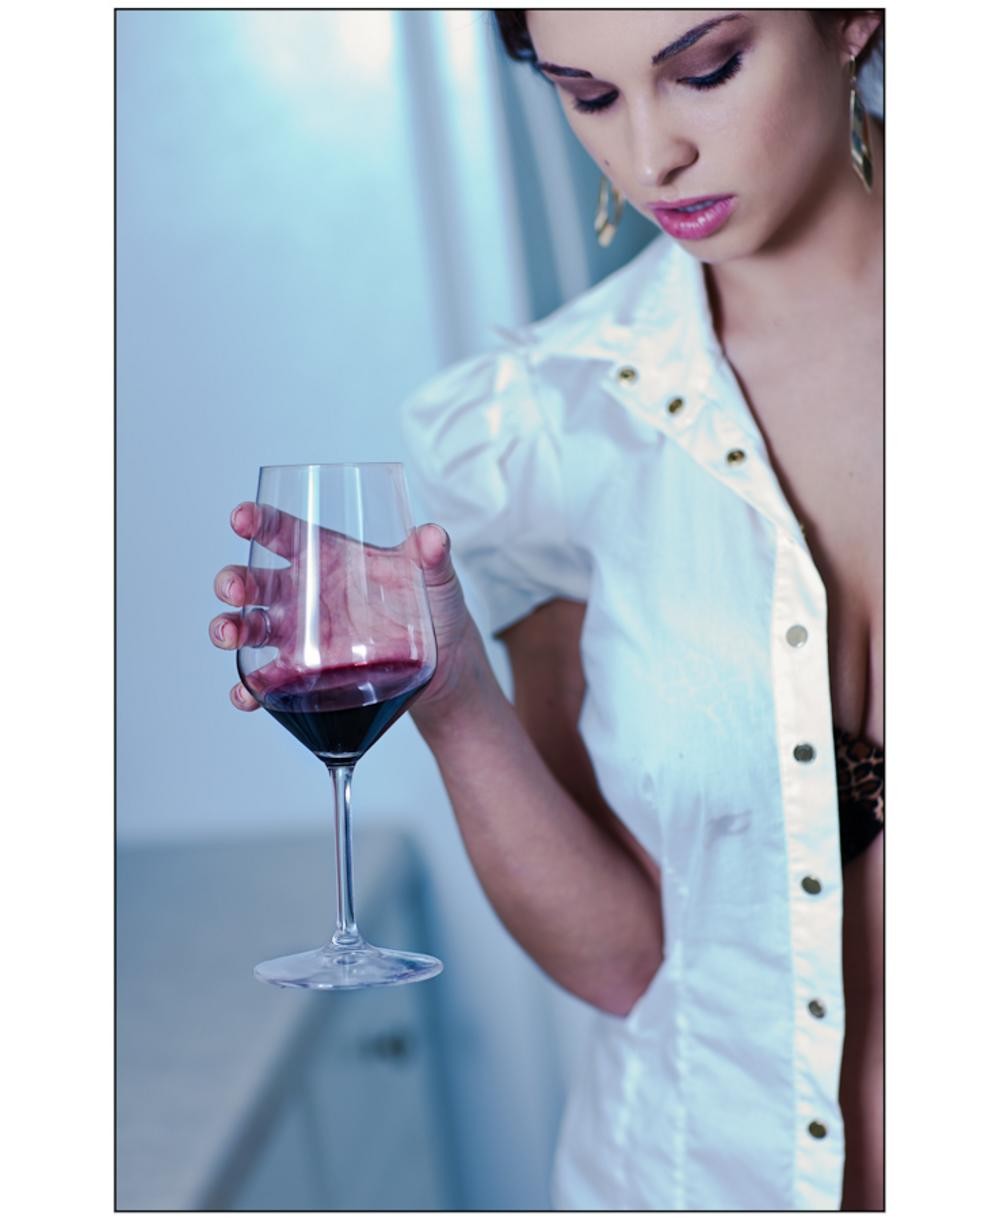 Sabrina Maree enjoys a glass of wine after a hard days work #71606584